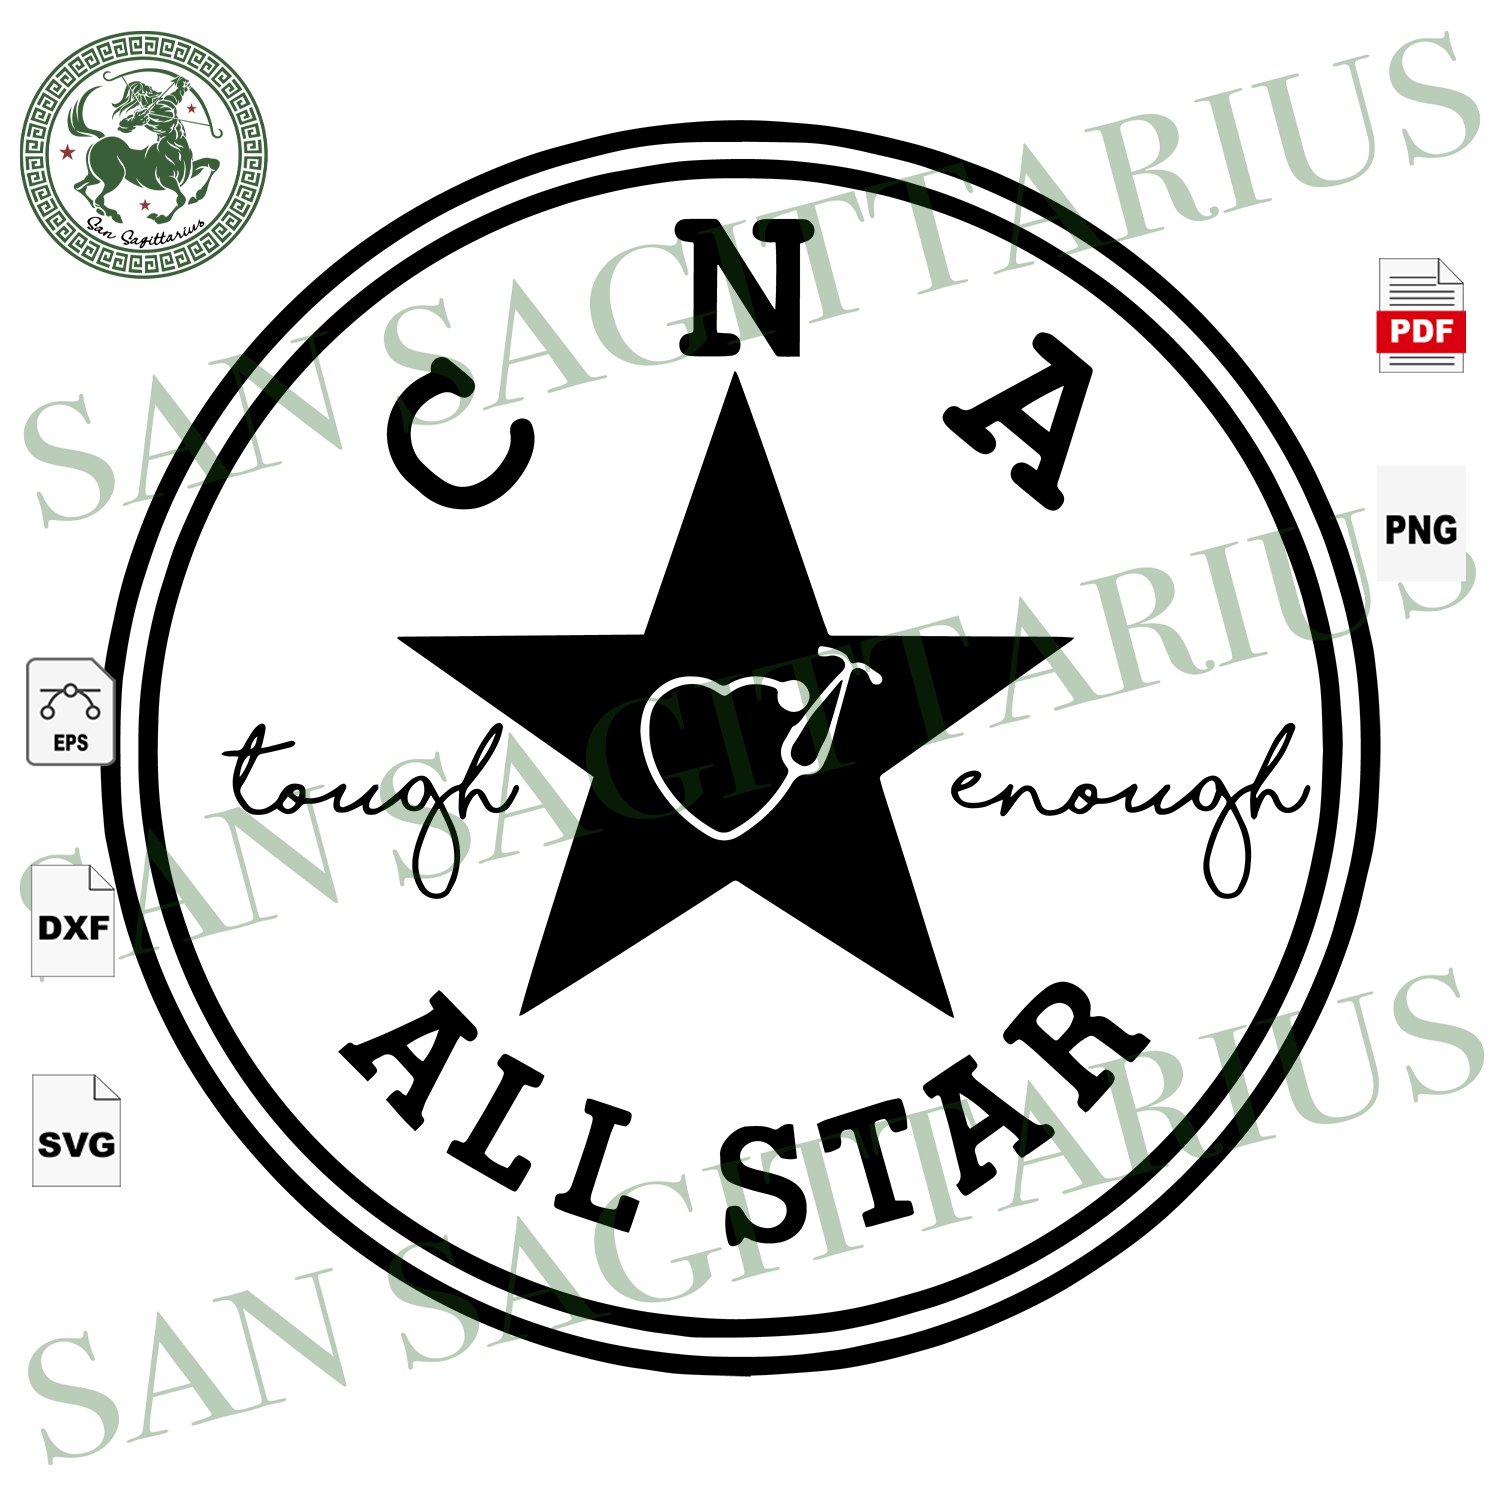 Download Cna Taught Enough All Star Nurse Svg Nursing School Graduation Gift San Sagittarius